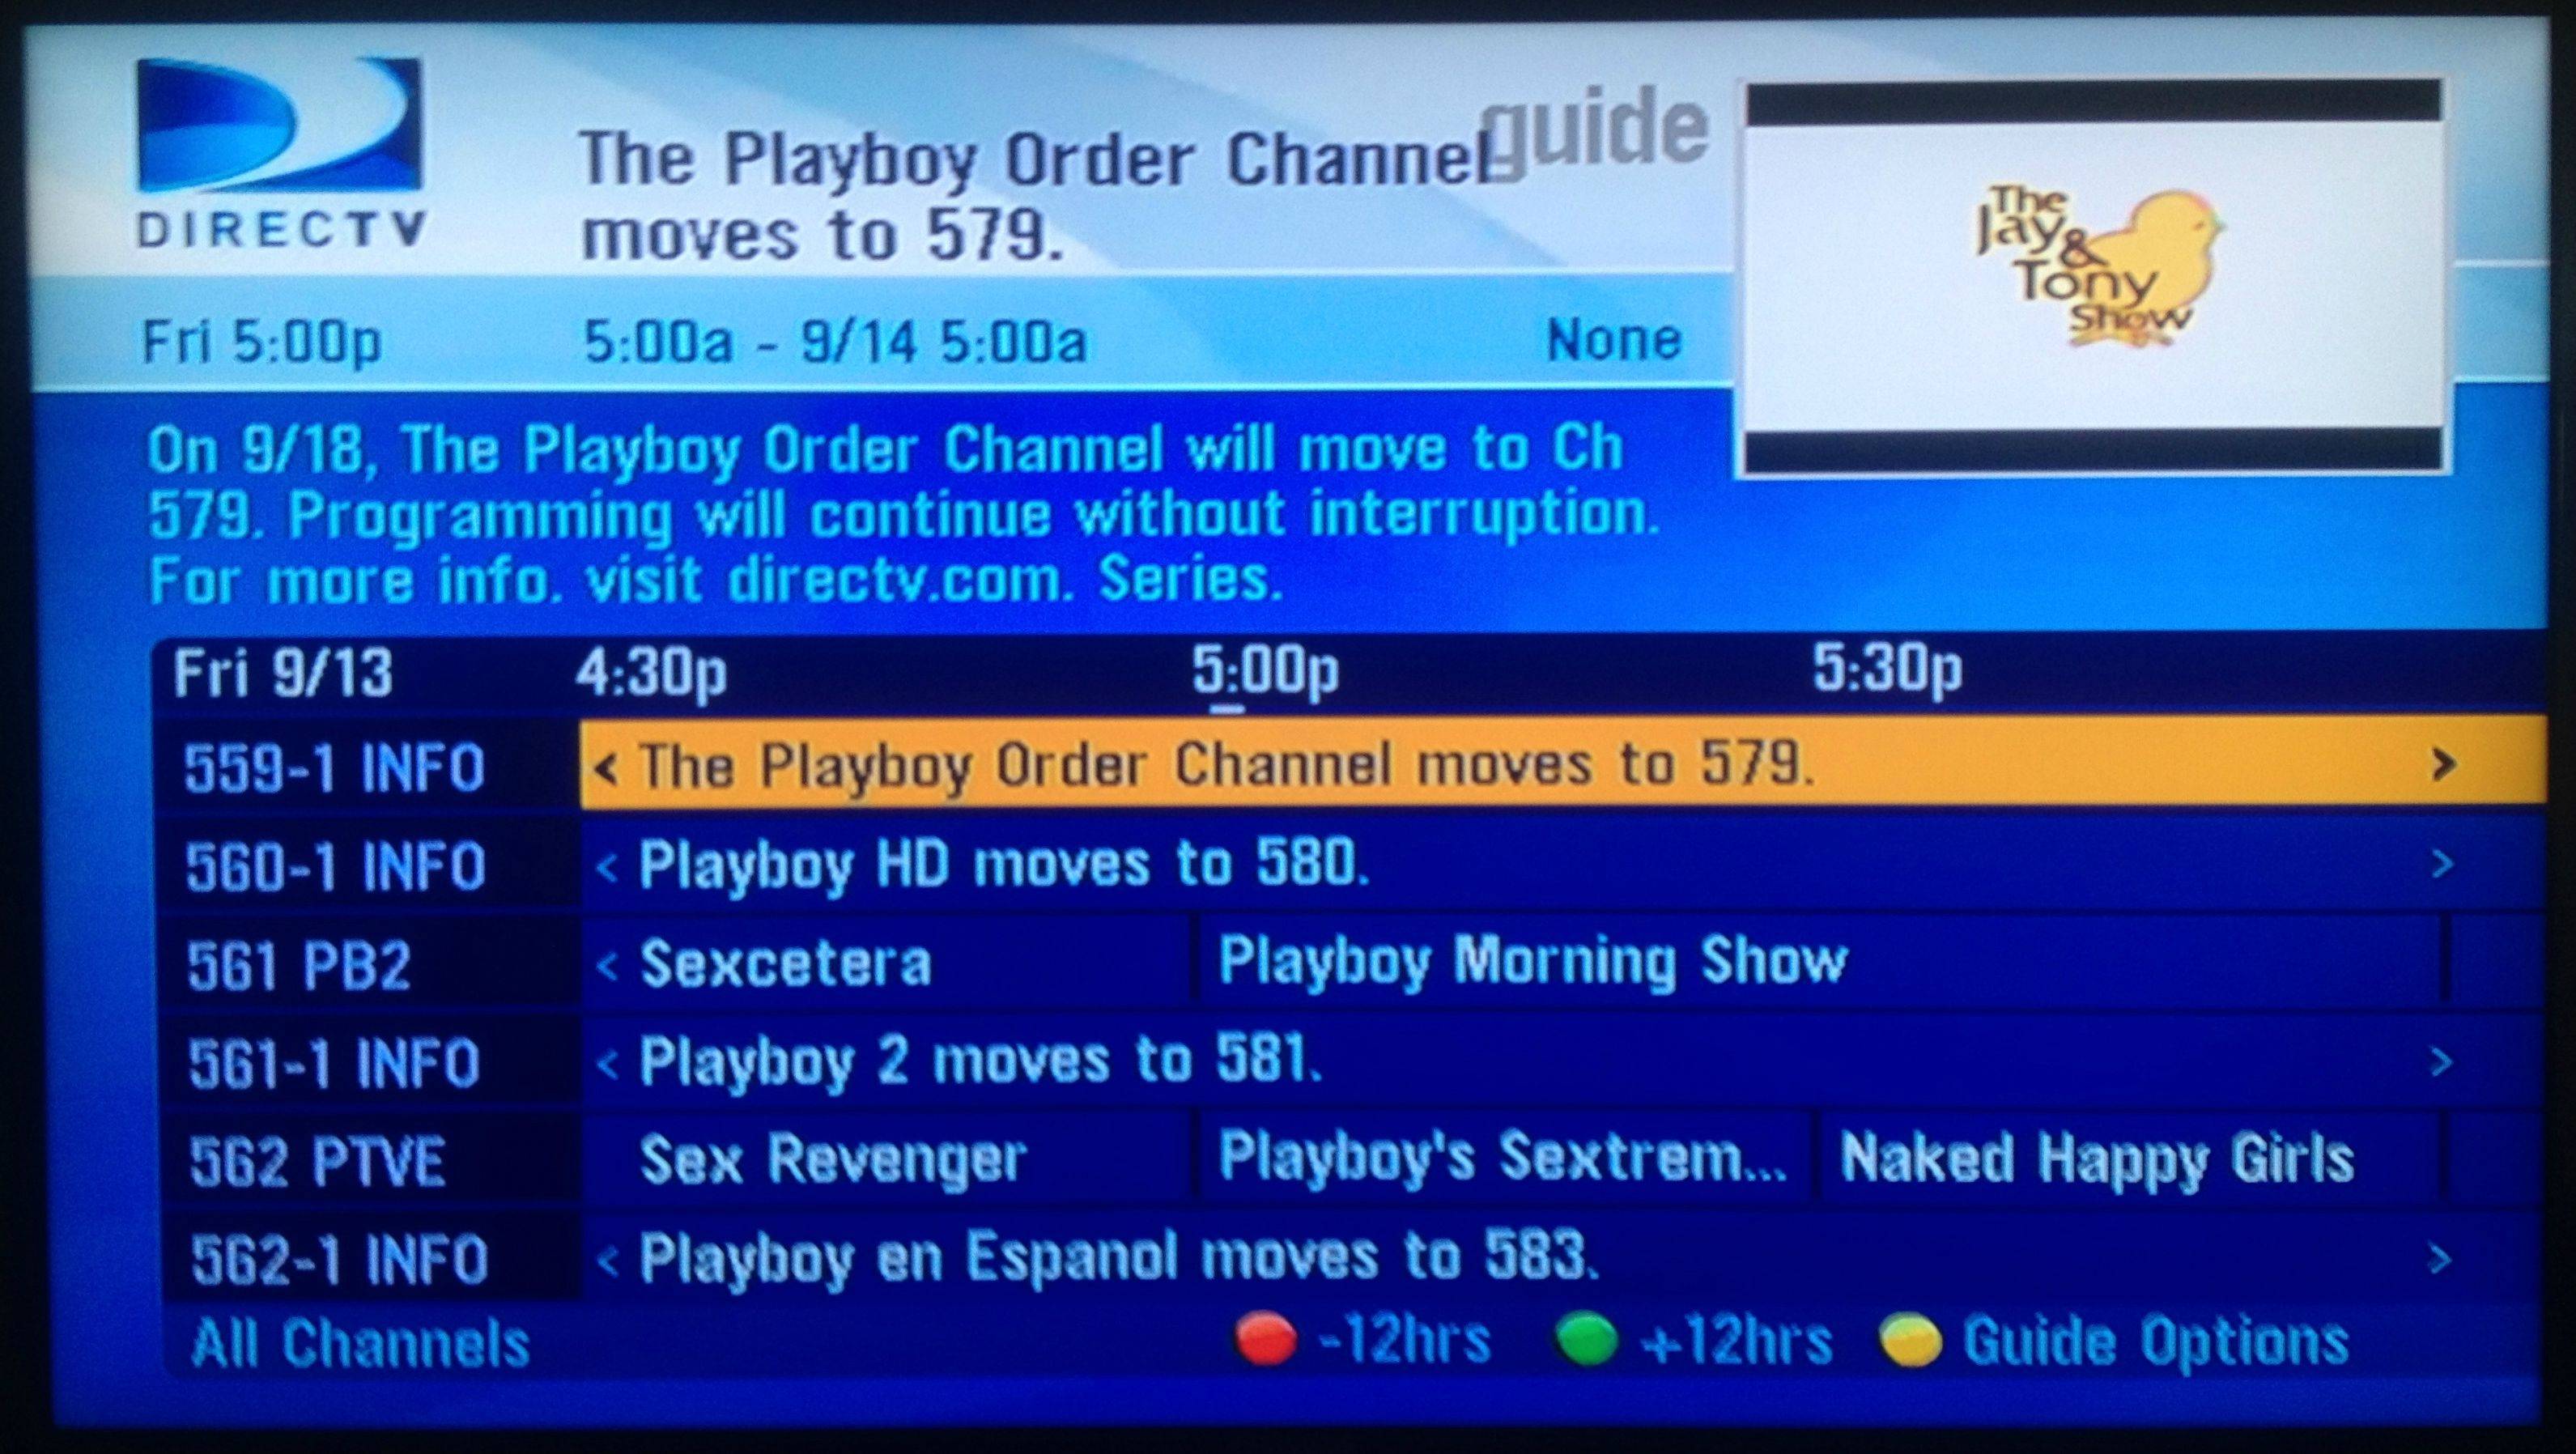 dianne e davis recommends porn channels on directv pic